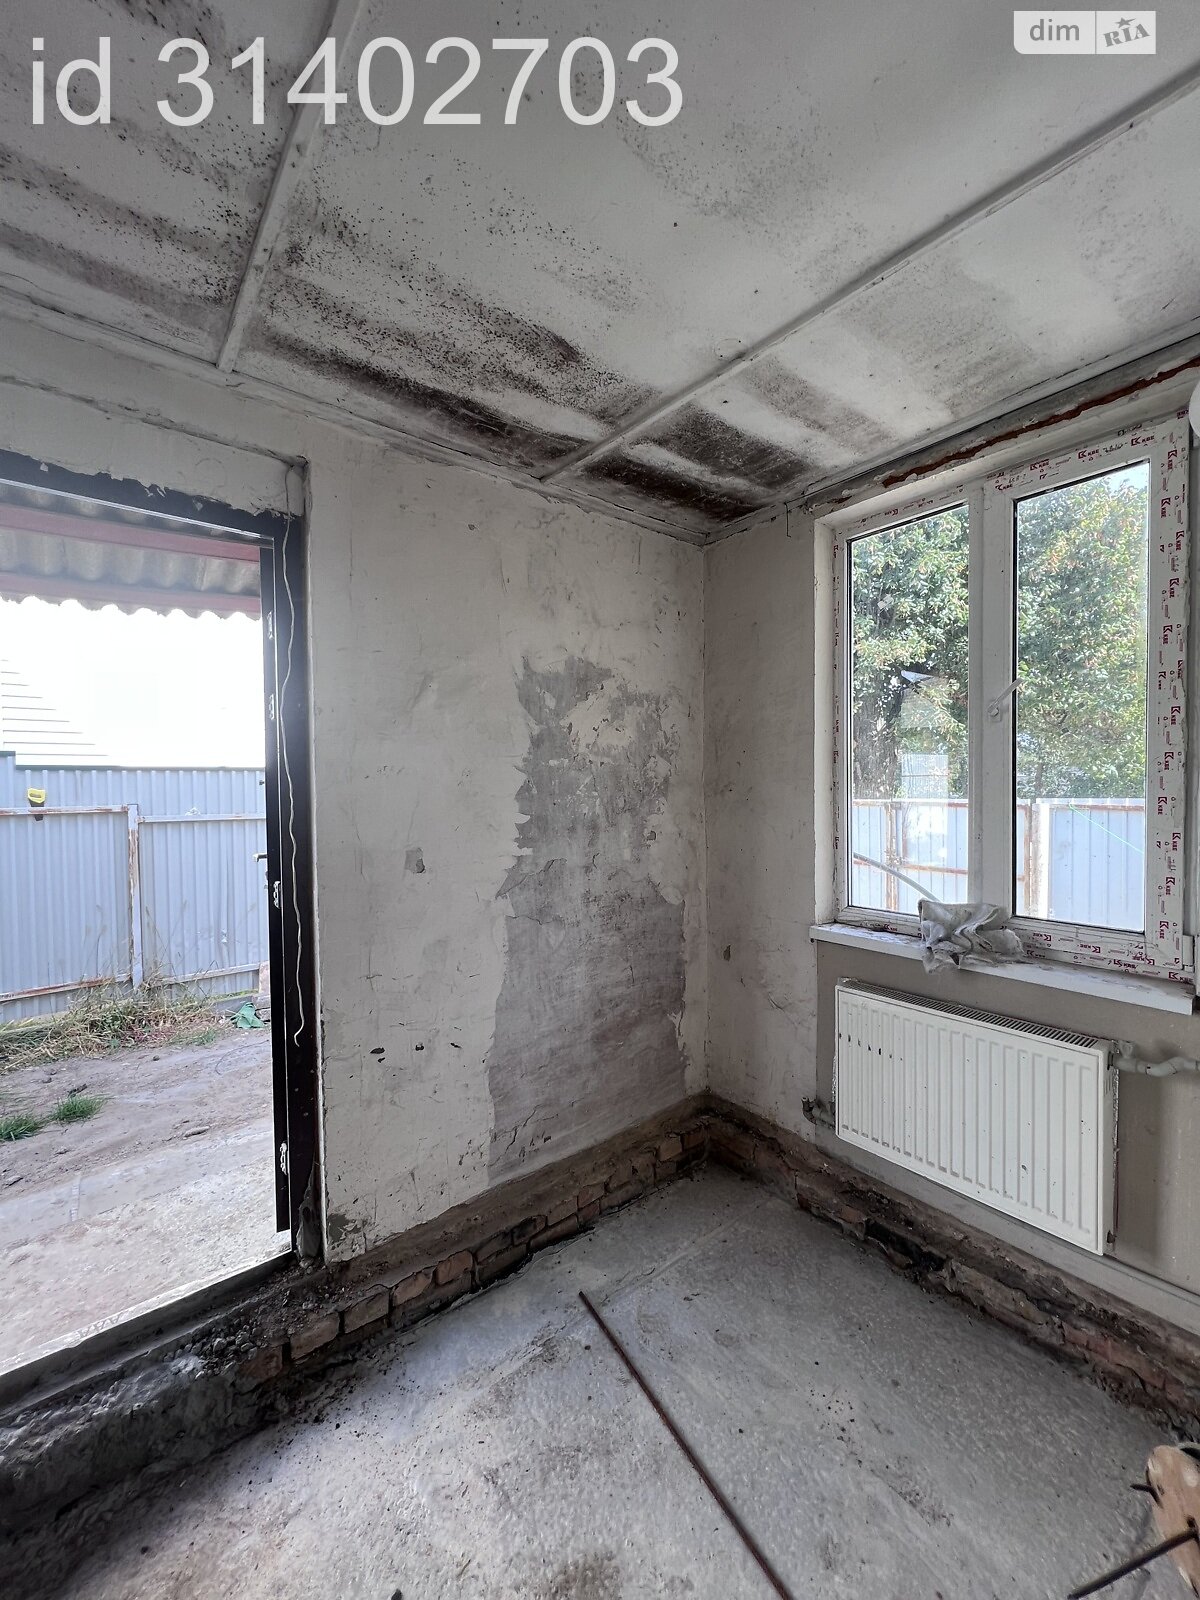 Продажа части дома в Боярке, улица Анатолия Пастернака (Высоковольтная), 2 комнаты фото 1